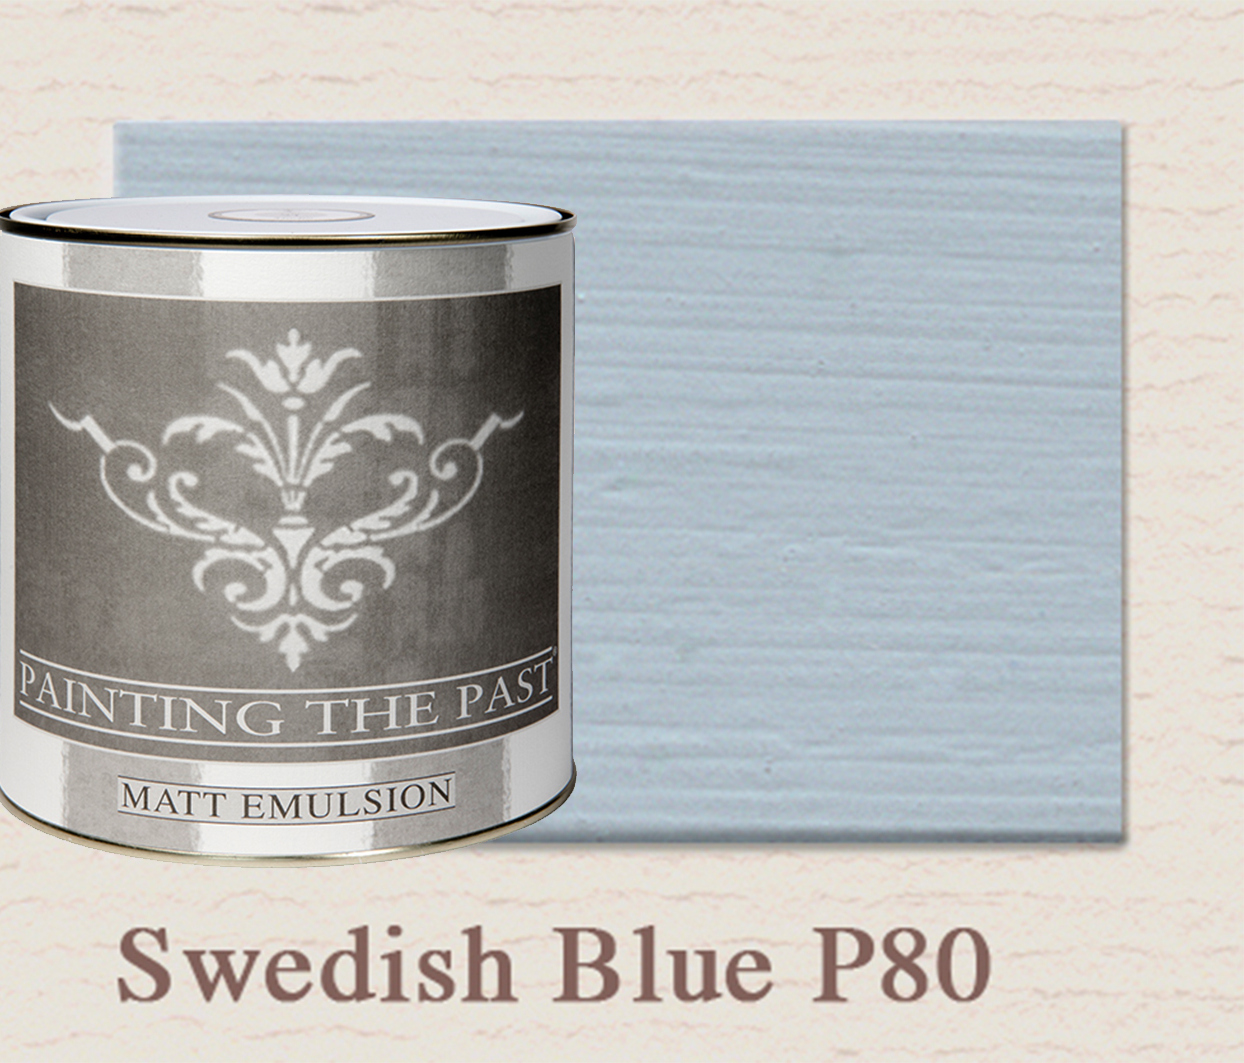 Painting The Past Matt Emulsion Swedish Blue